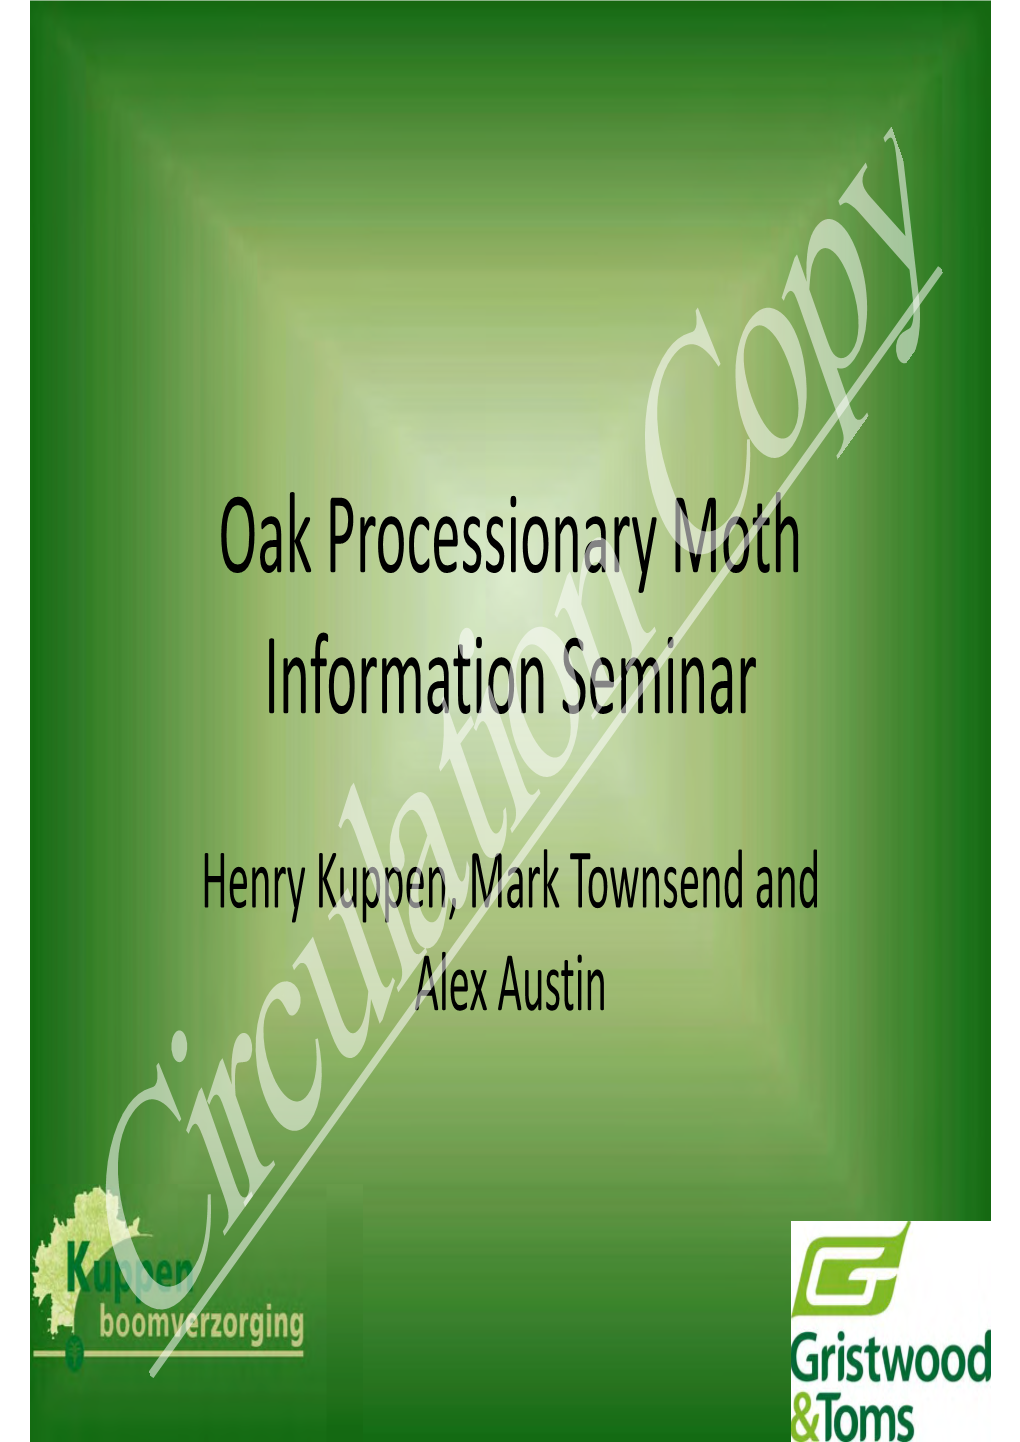 Oak Processionary Moth Information Seminarcopy